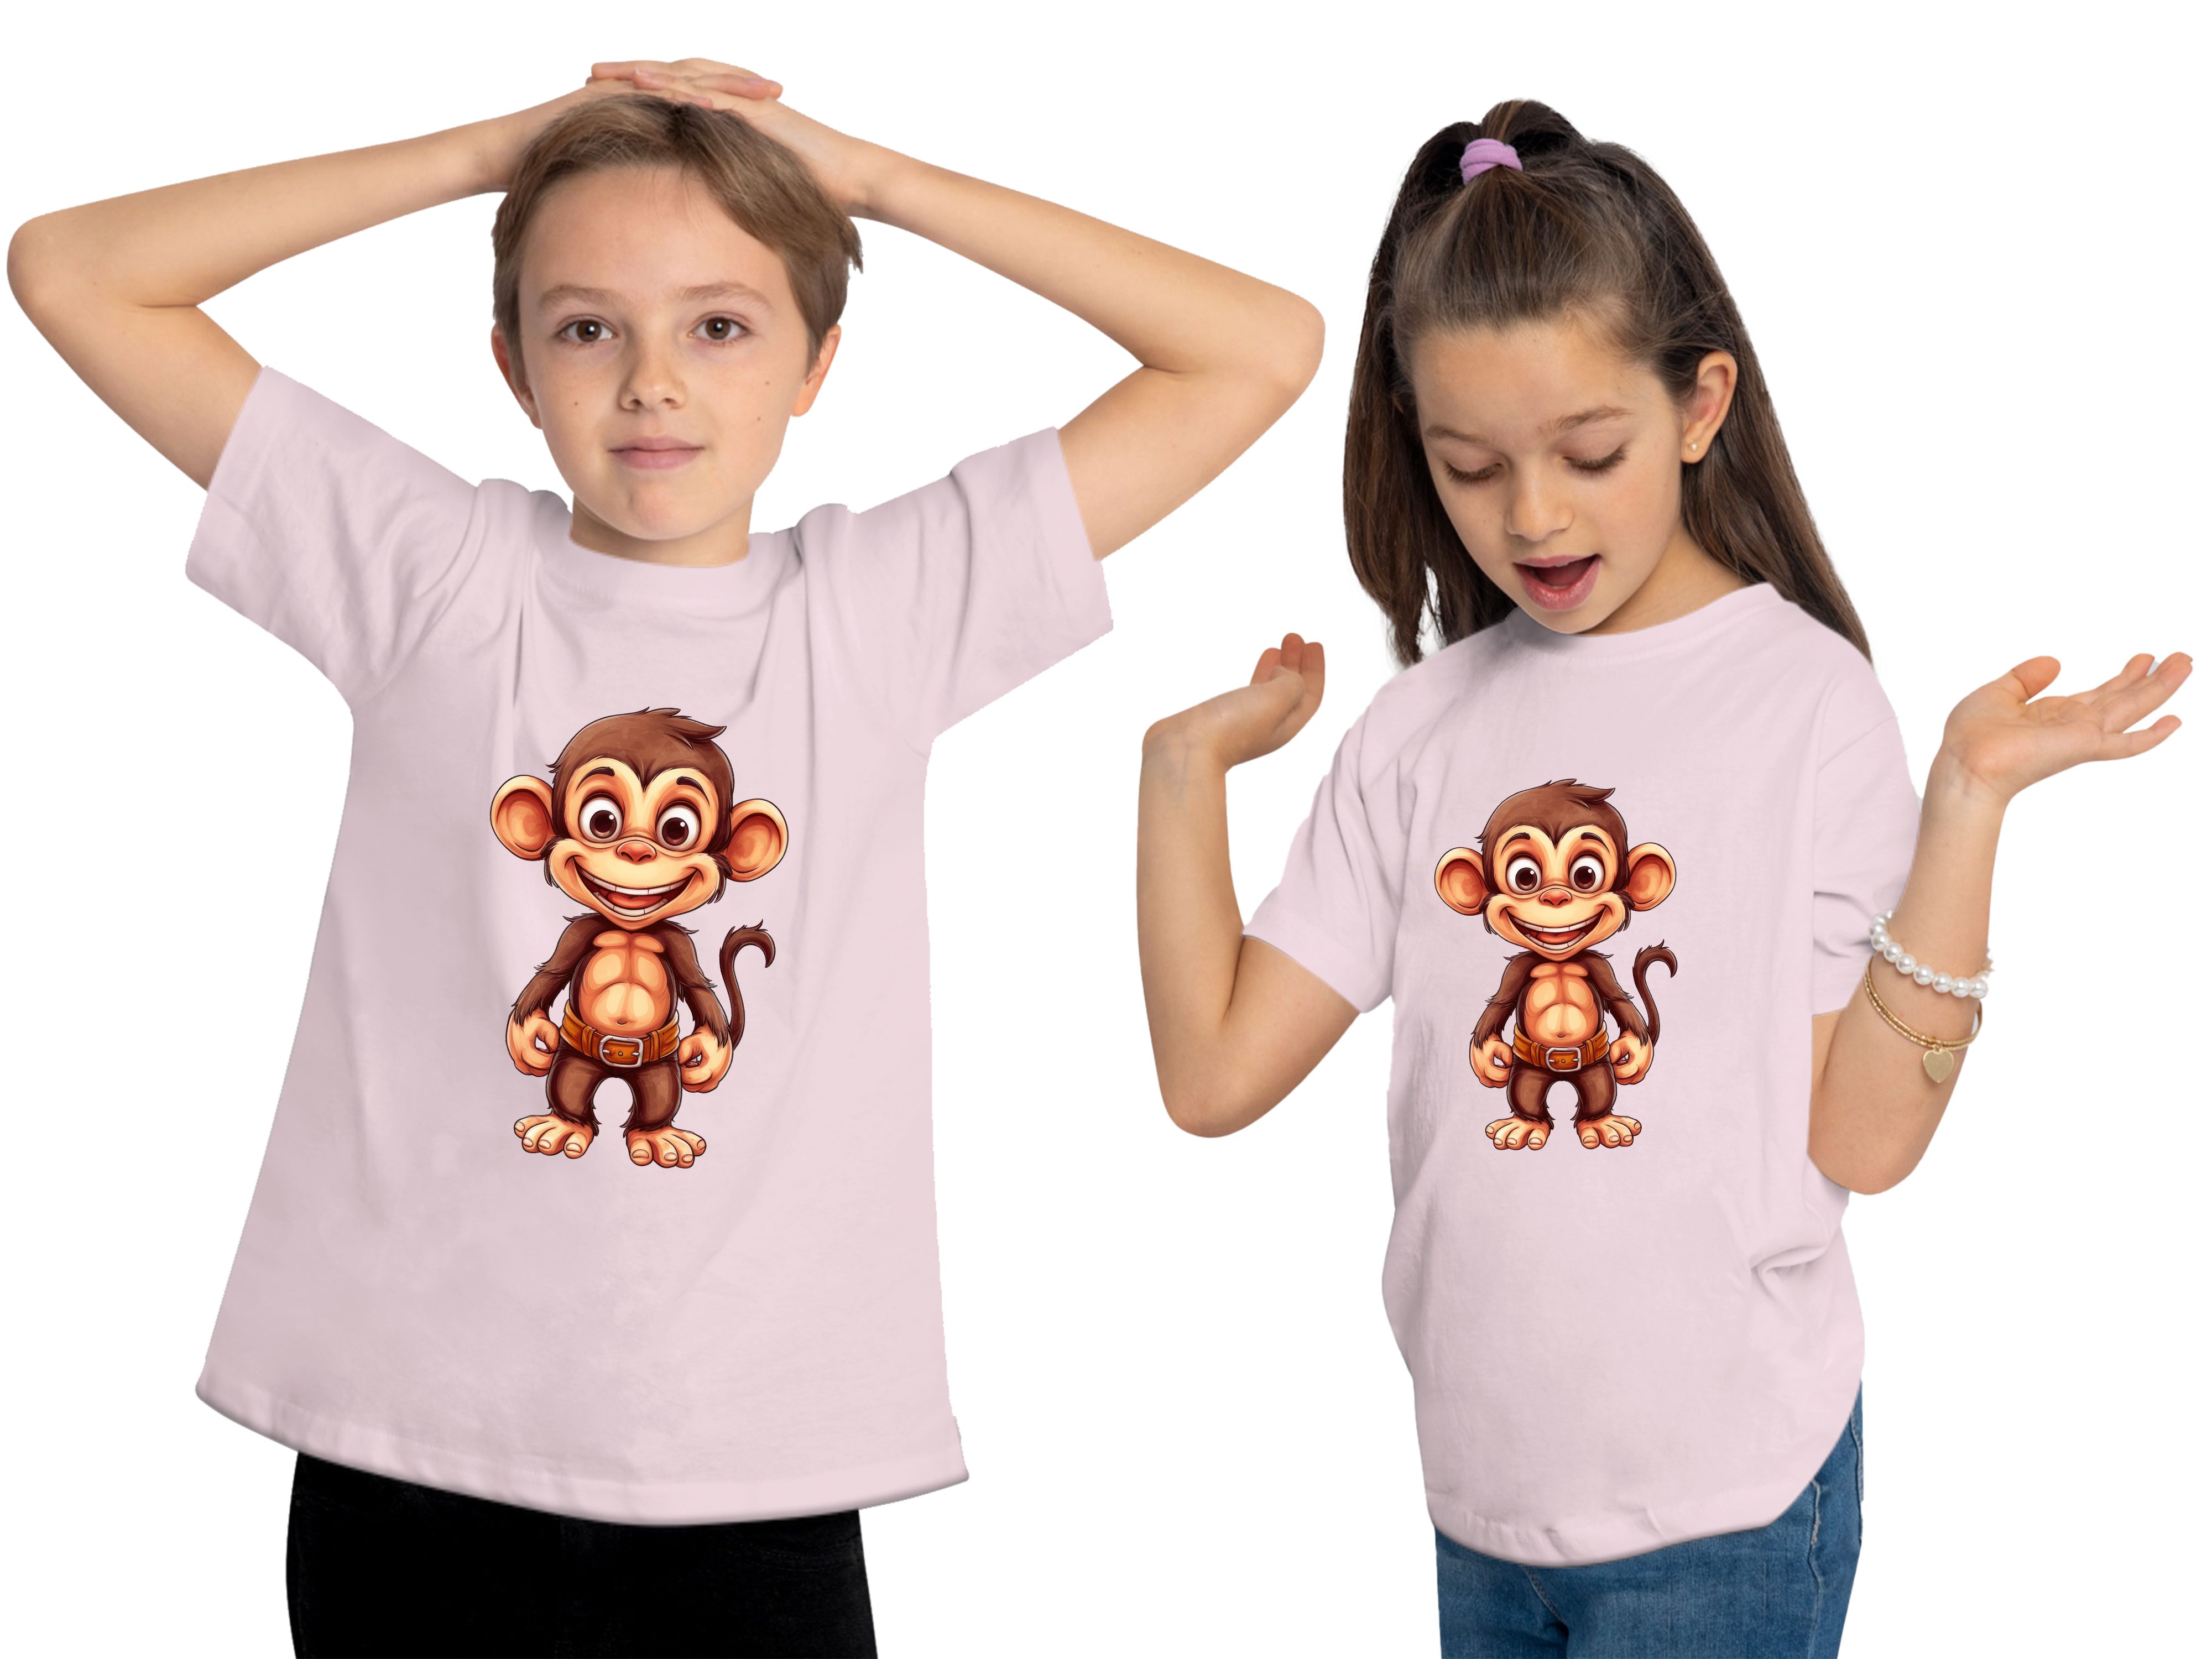 Kinder Aufdruck, Print Affe T-Shirt i276 Wildtier mit bedruckt Shirt - rosa MyDesign24 Baby Schimpanse Baumwollshirt